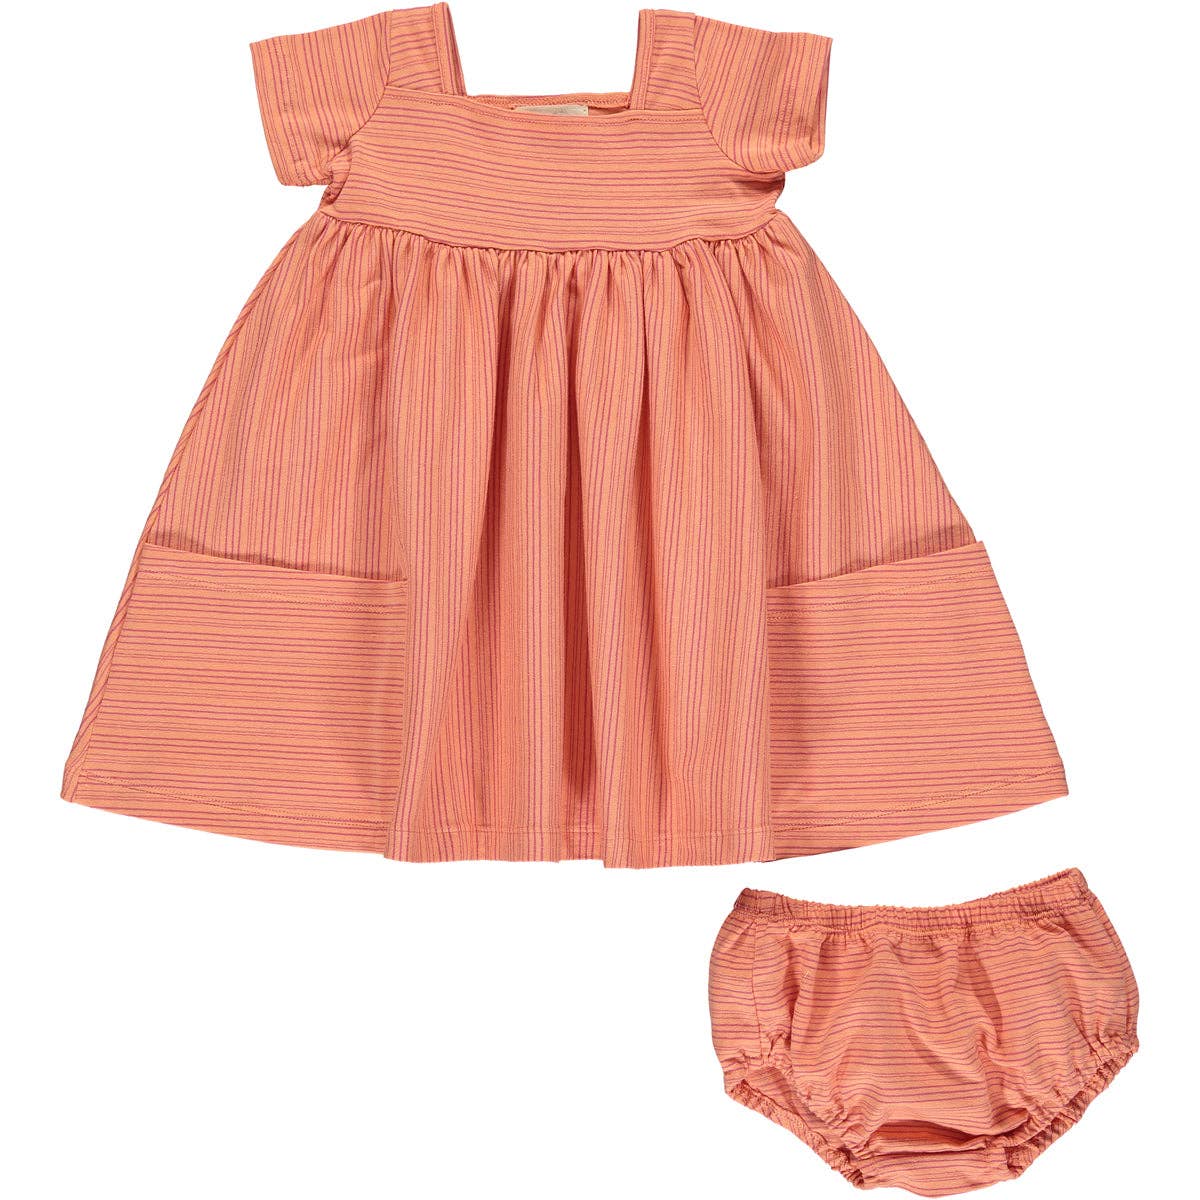 Rylie dress in orange/coral stripe